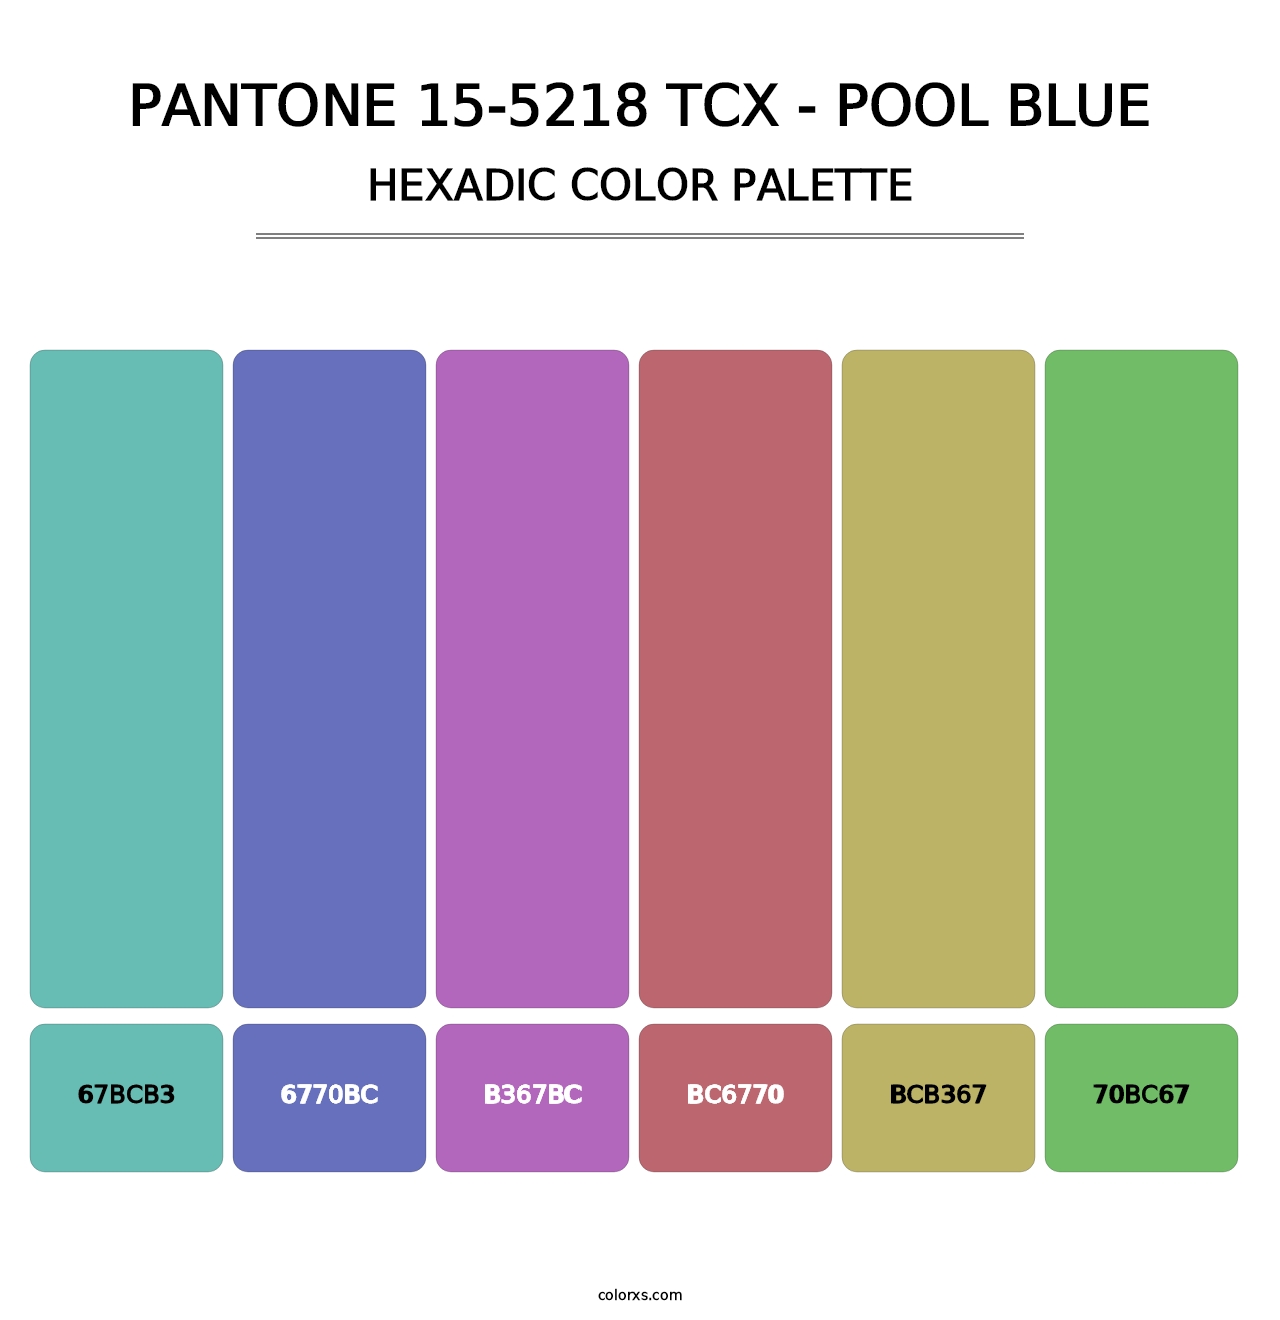 PANTONE 15-5218 TCX - Pool Blue - Hexadic Color Palette